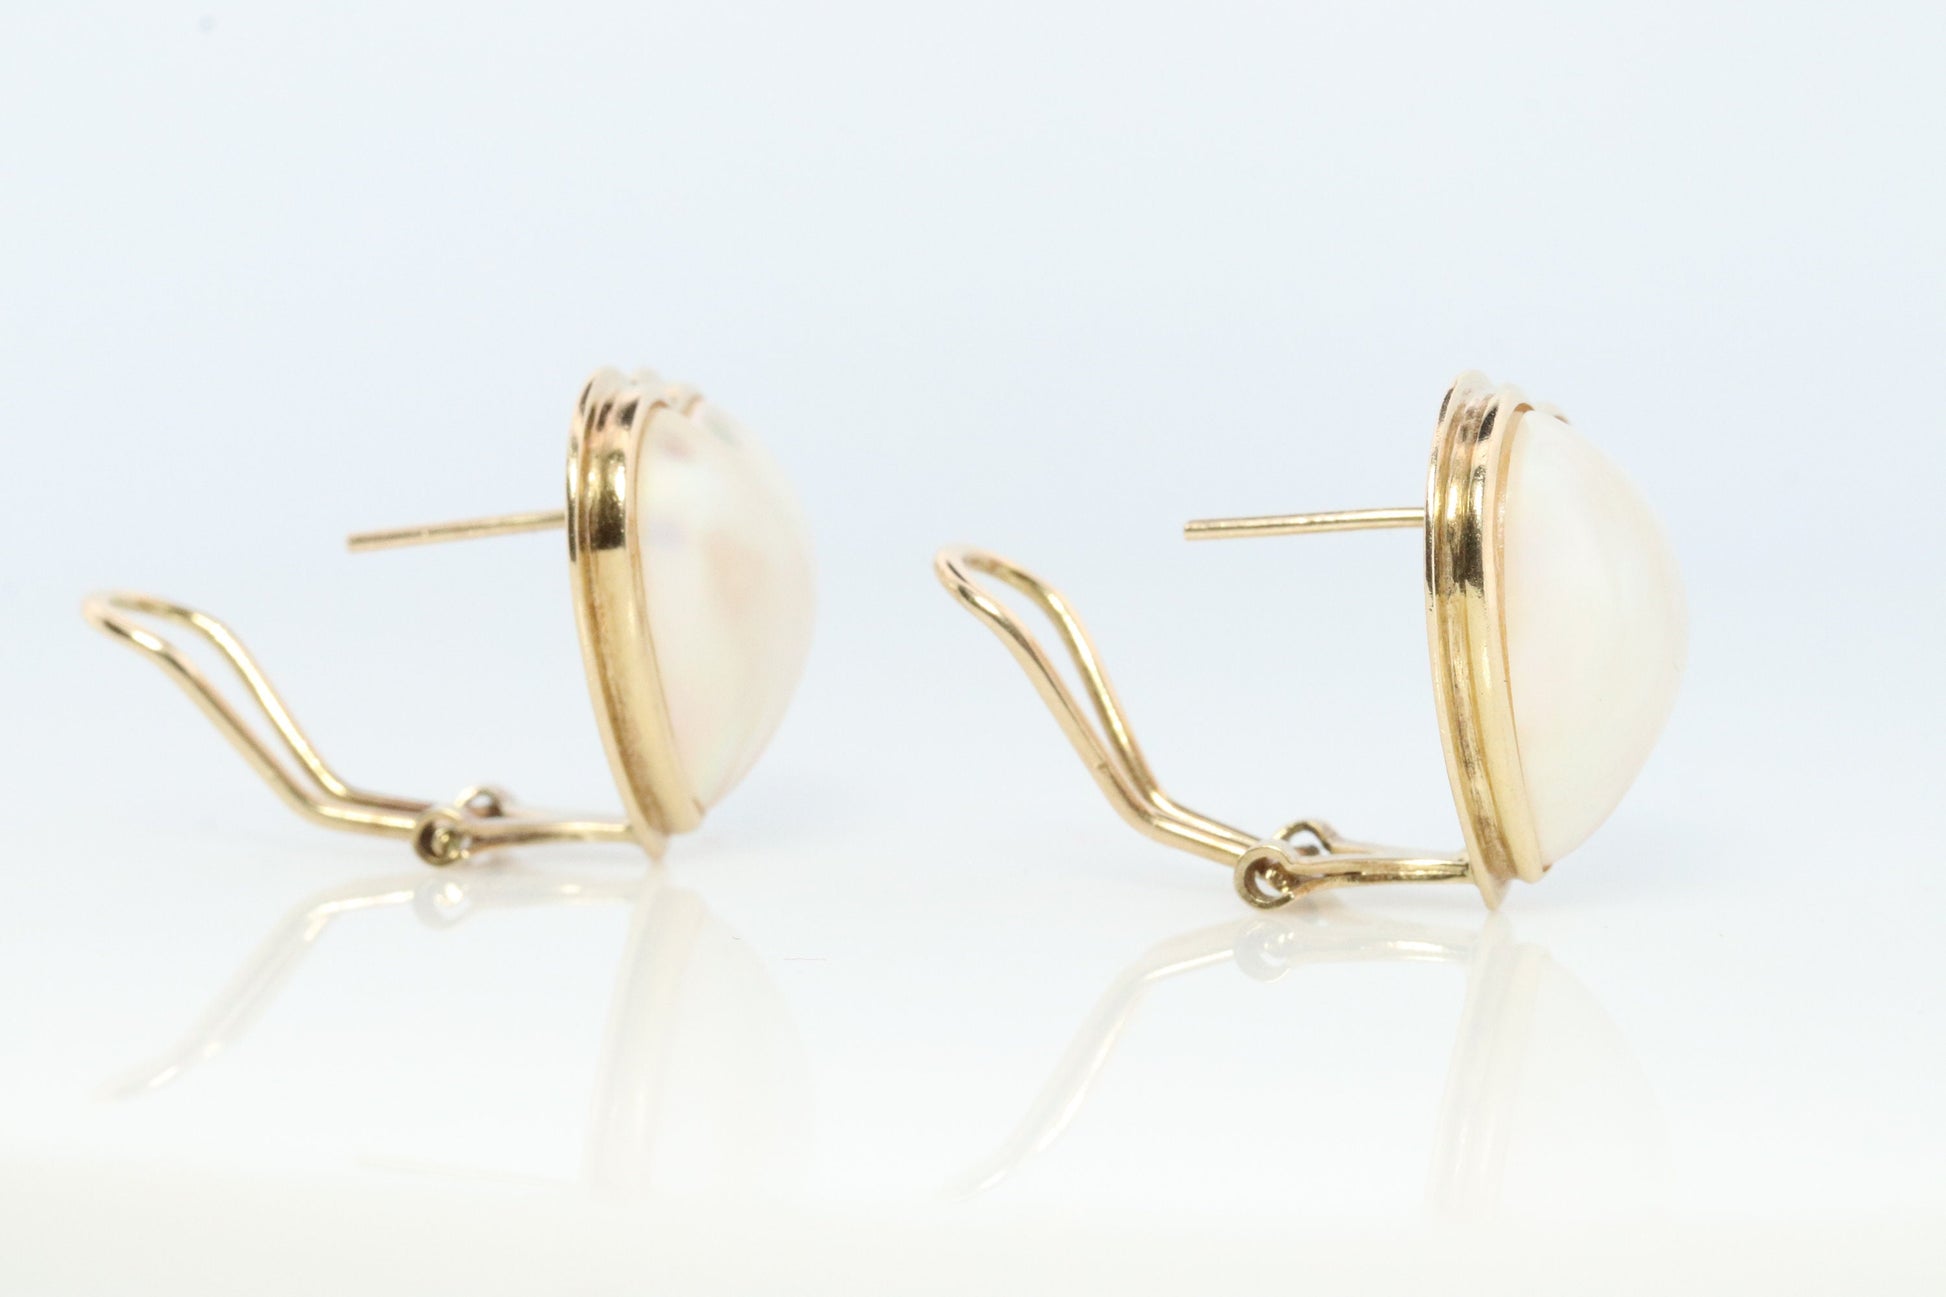 14k Large MABE Pearl Earrings Diamond Omega earrings. Omega Back Heart Round Mabe Pearl Earrings